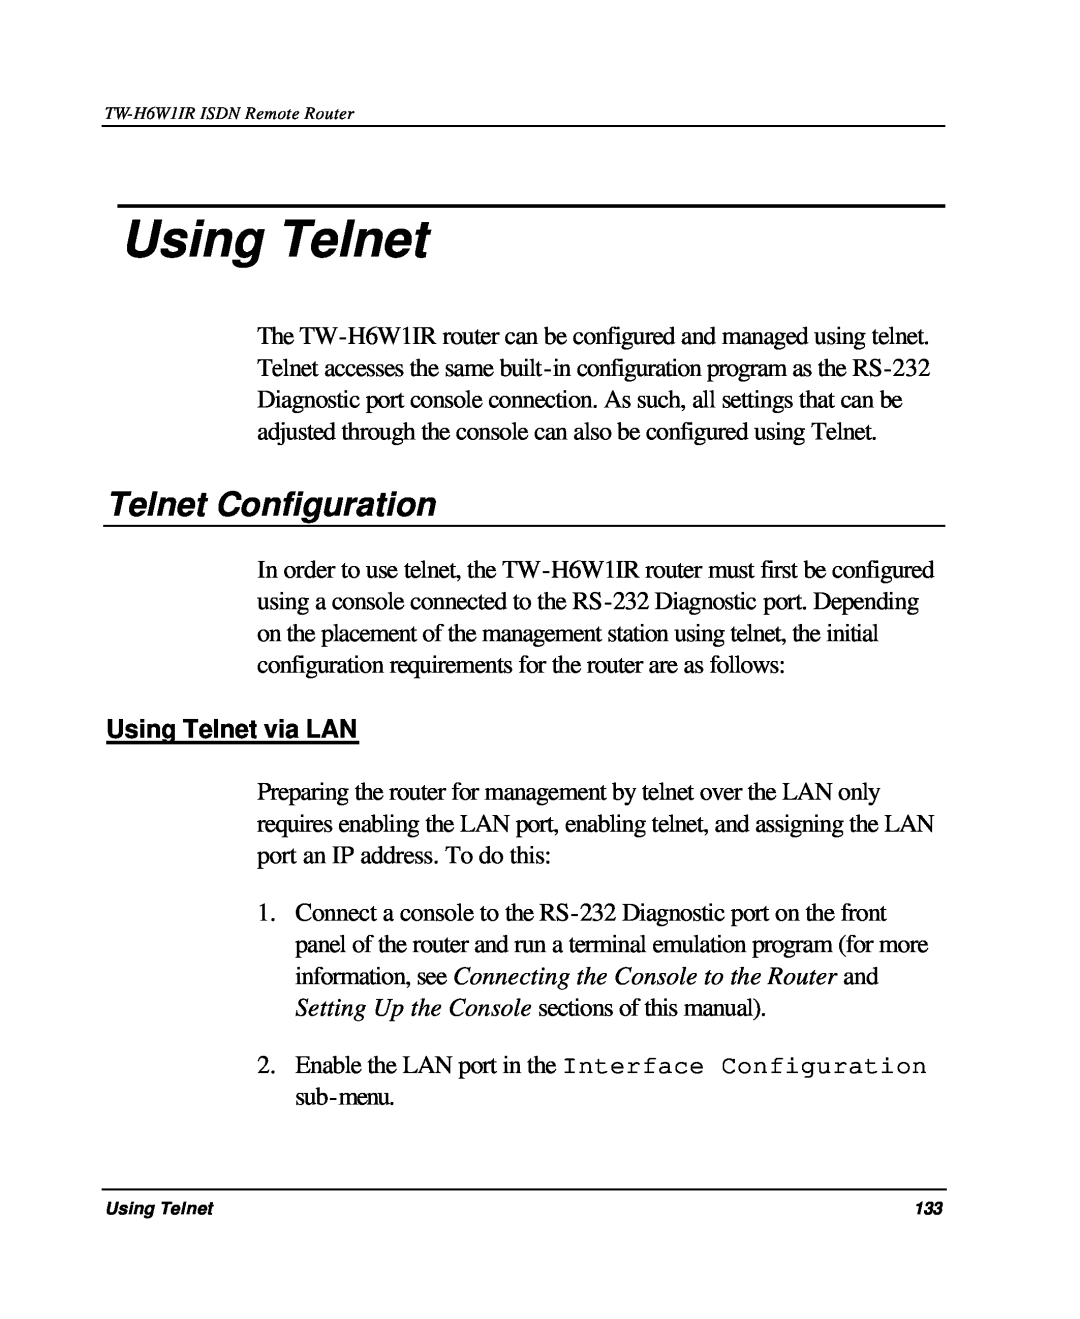 TRENDnet TW-H6W1IR manual Telnet Configuration, Using Telnet via LAN 